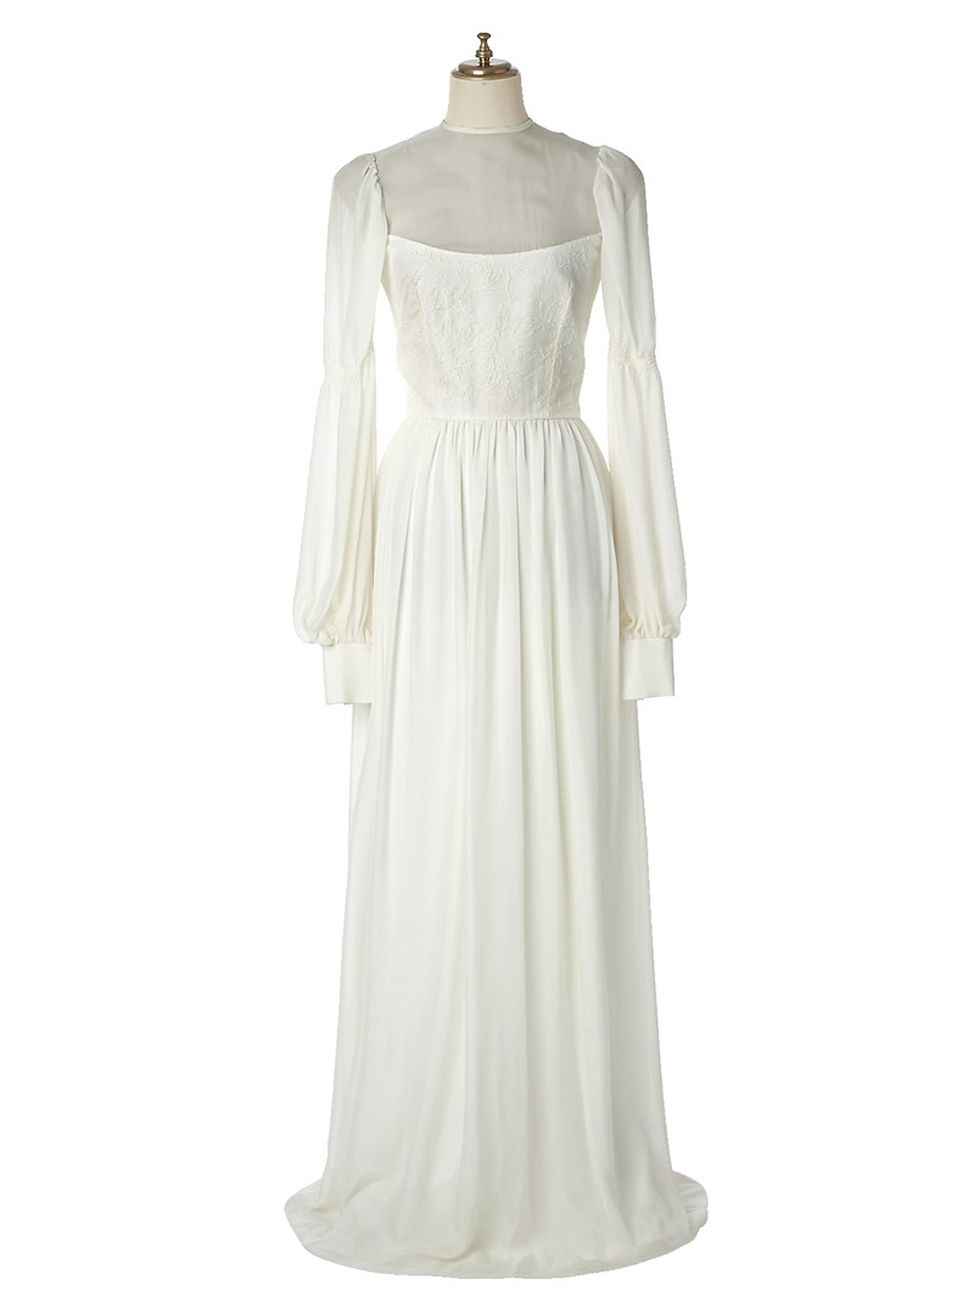 Dress, Shoulder, Textile, White, One-piece garment, Formal wear, Style, Gown, Wedding dress, Day dress, 